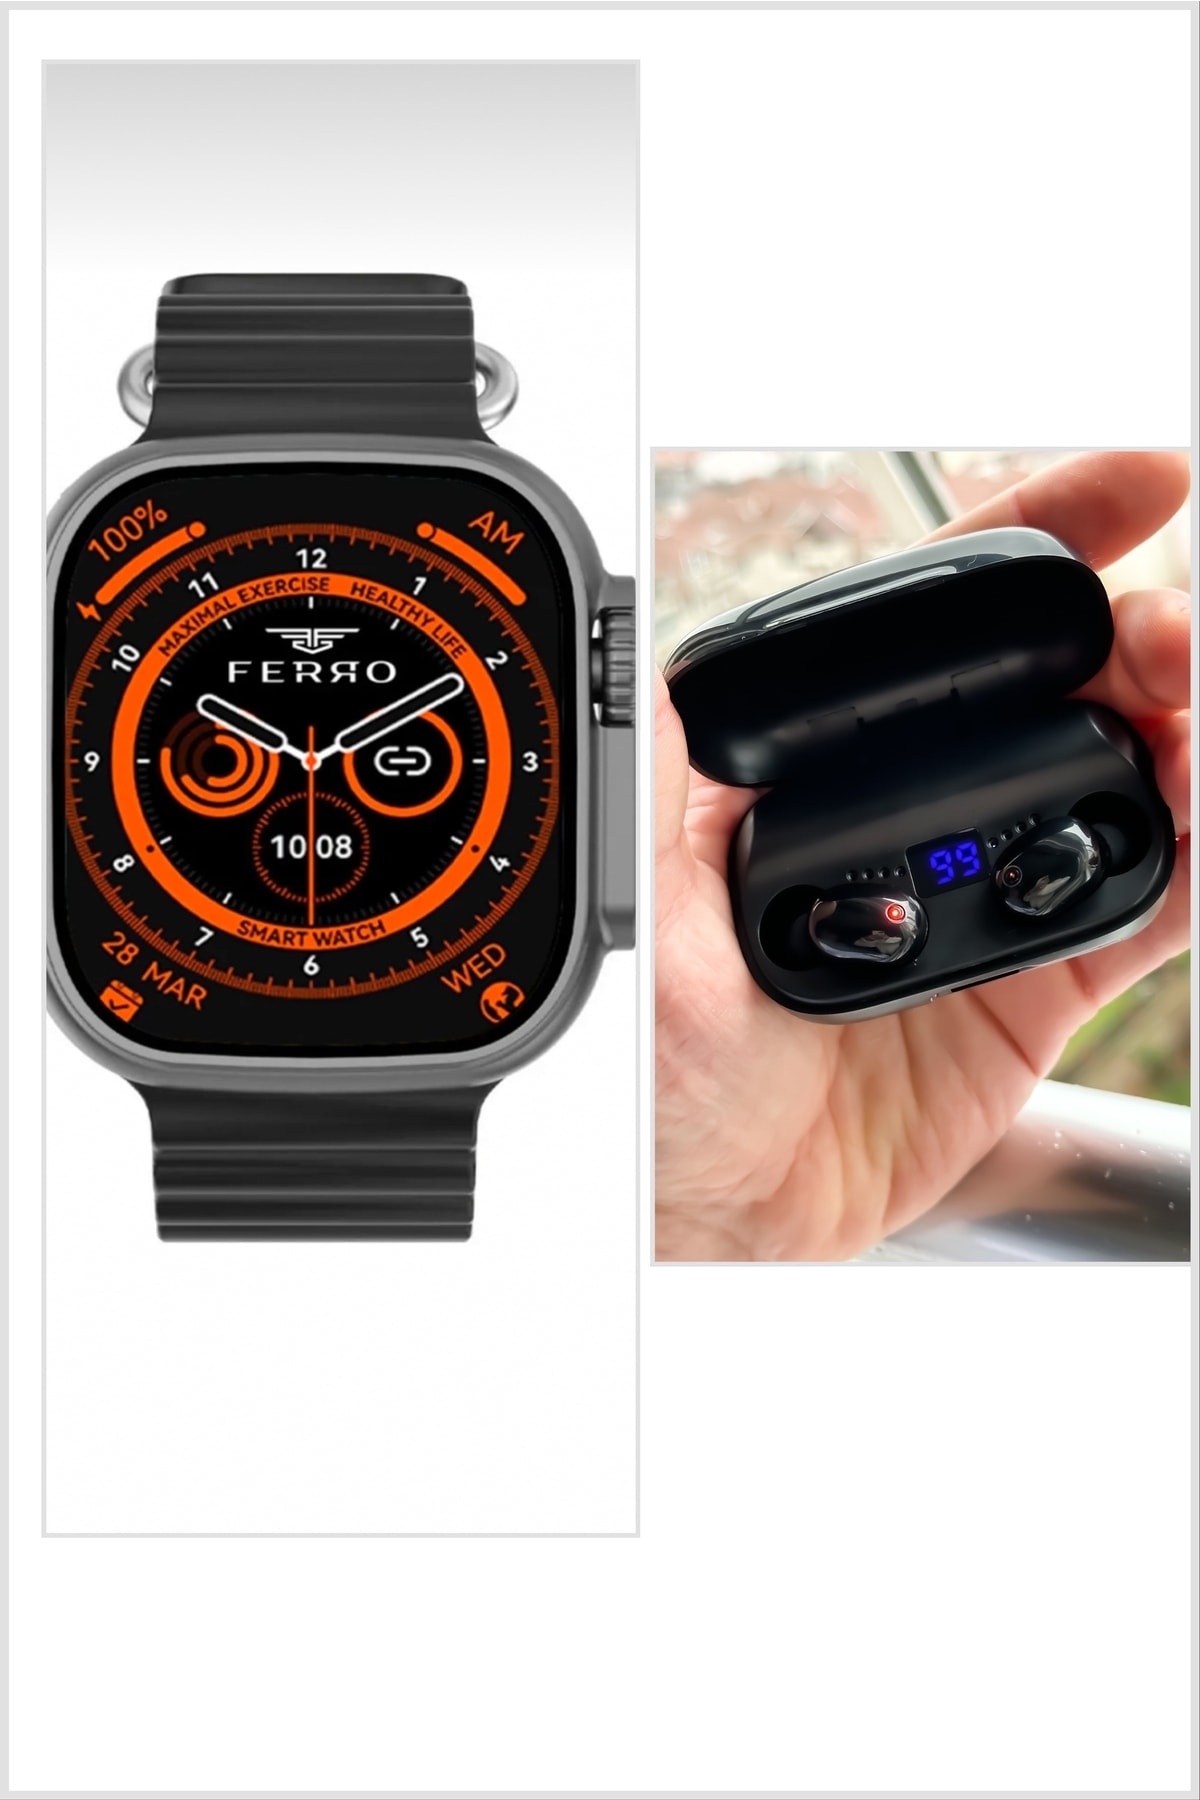 FERRO Ferrucci Ws8pro.10 Ios,android,sesli Görüşme,watch Erkek Akıllı Saat+powerbanklı Bluetooth Kulaklık